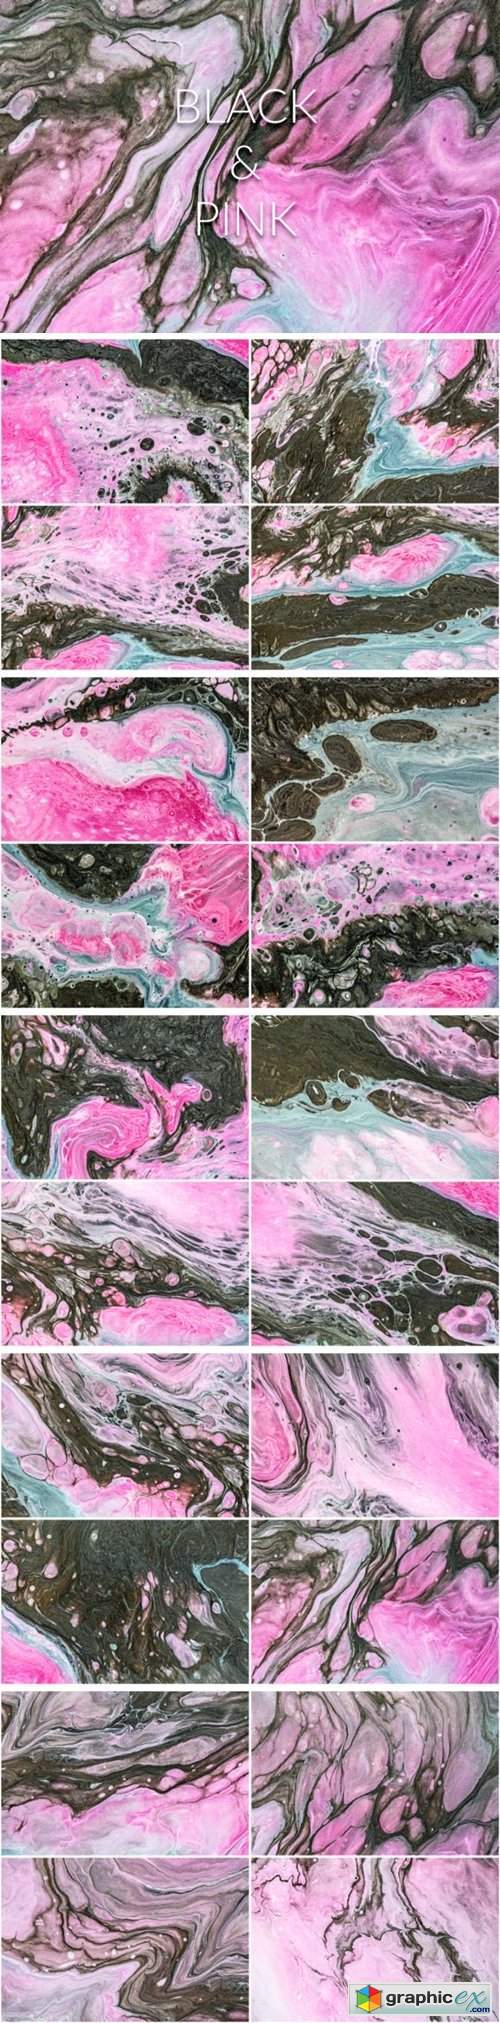 Handmade Liquid Paint - Black&Pink Vol.1